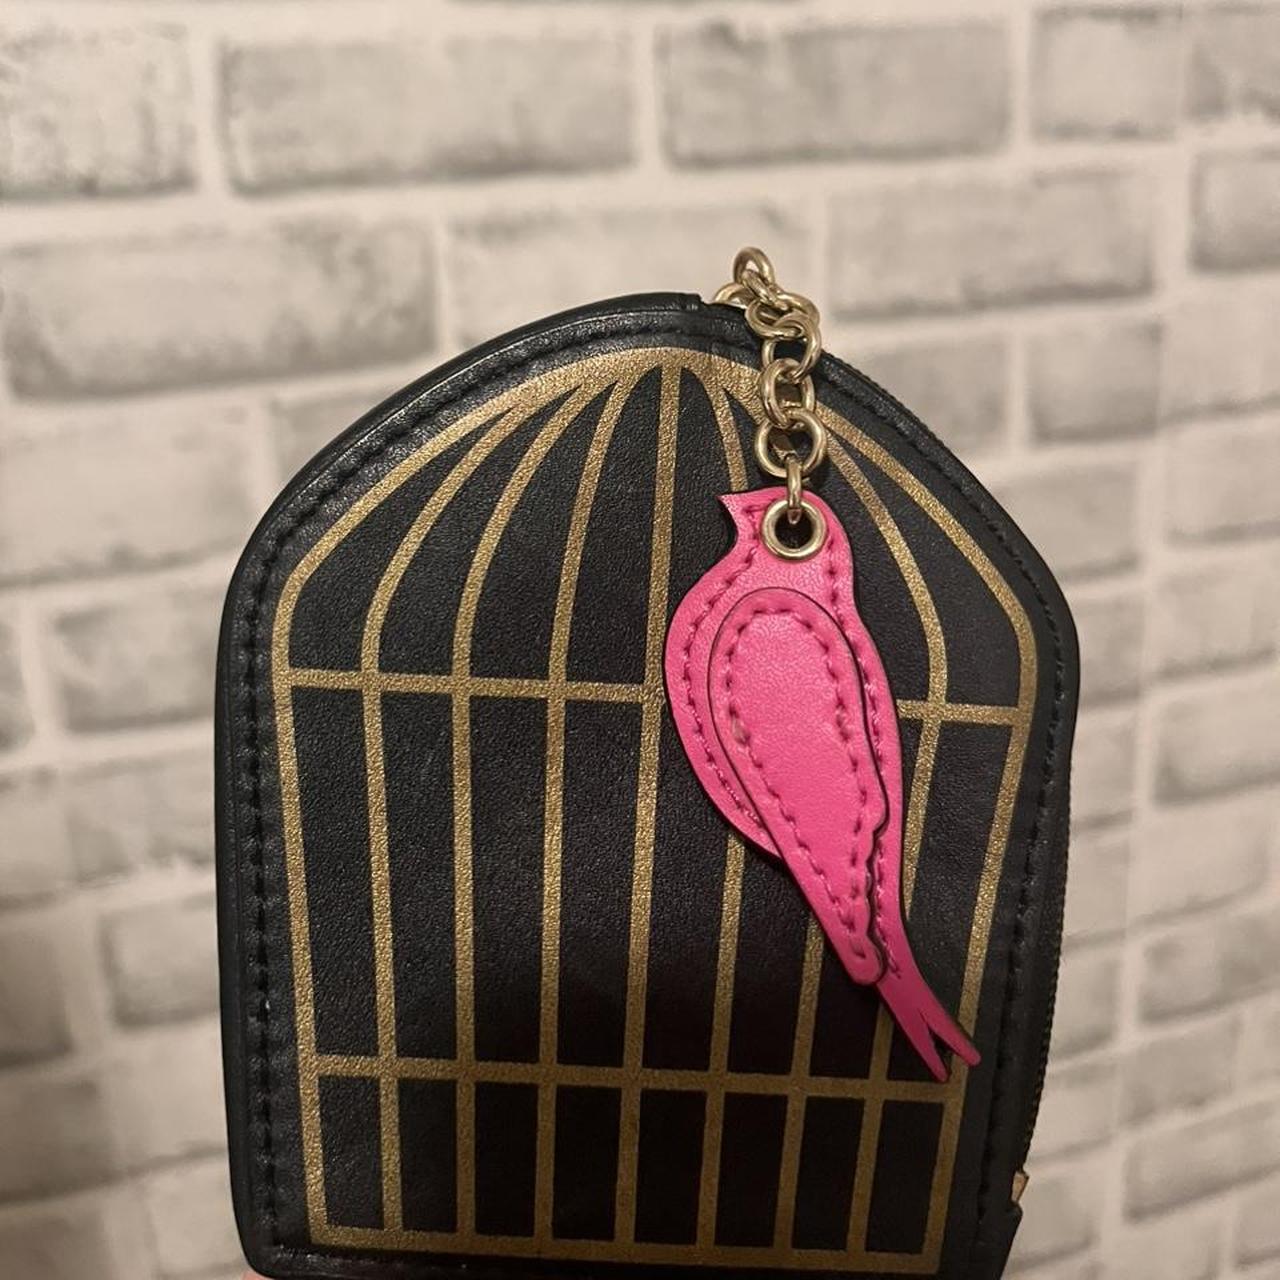 Kate Spade New York Women's Black and Pink Wallet-purses | Depop